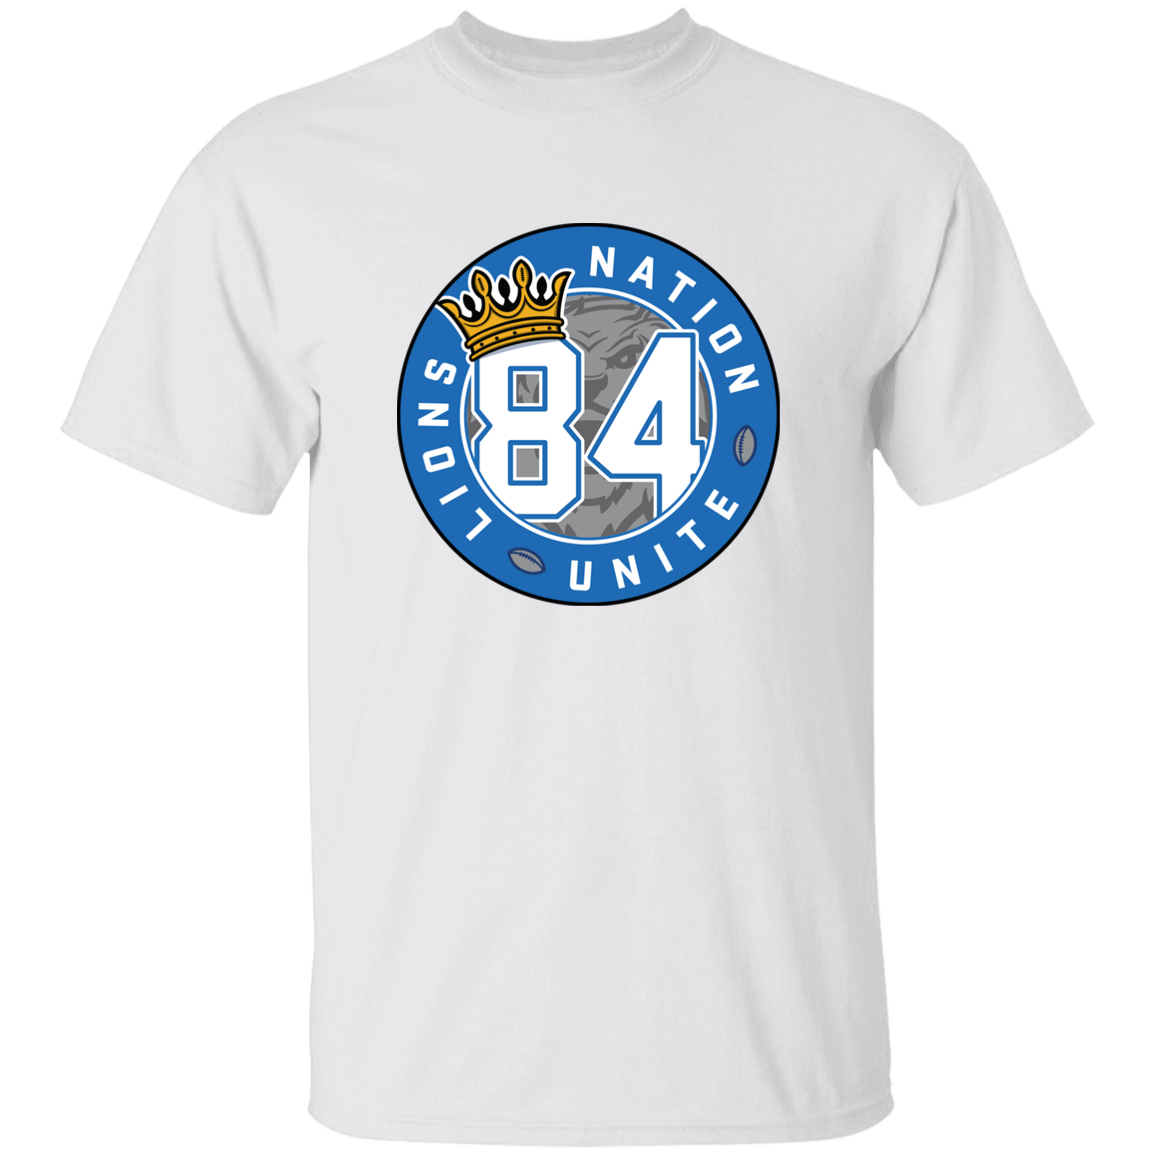 No. 84 Lions Nation Unite® Youth T-Shirt